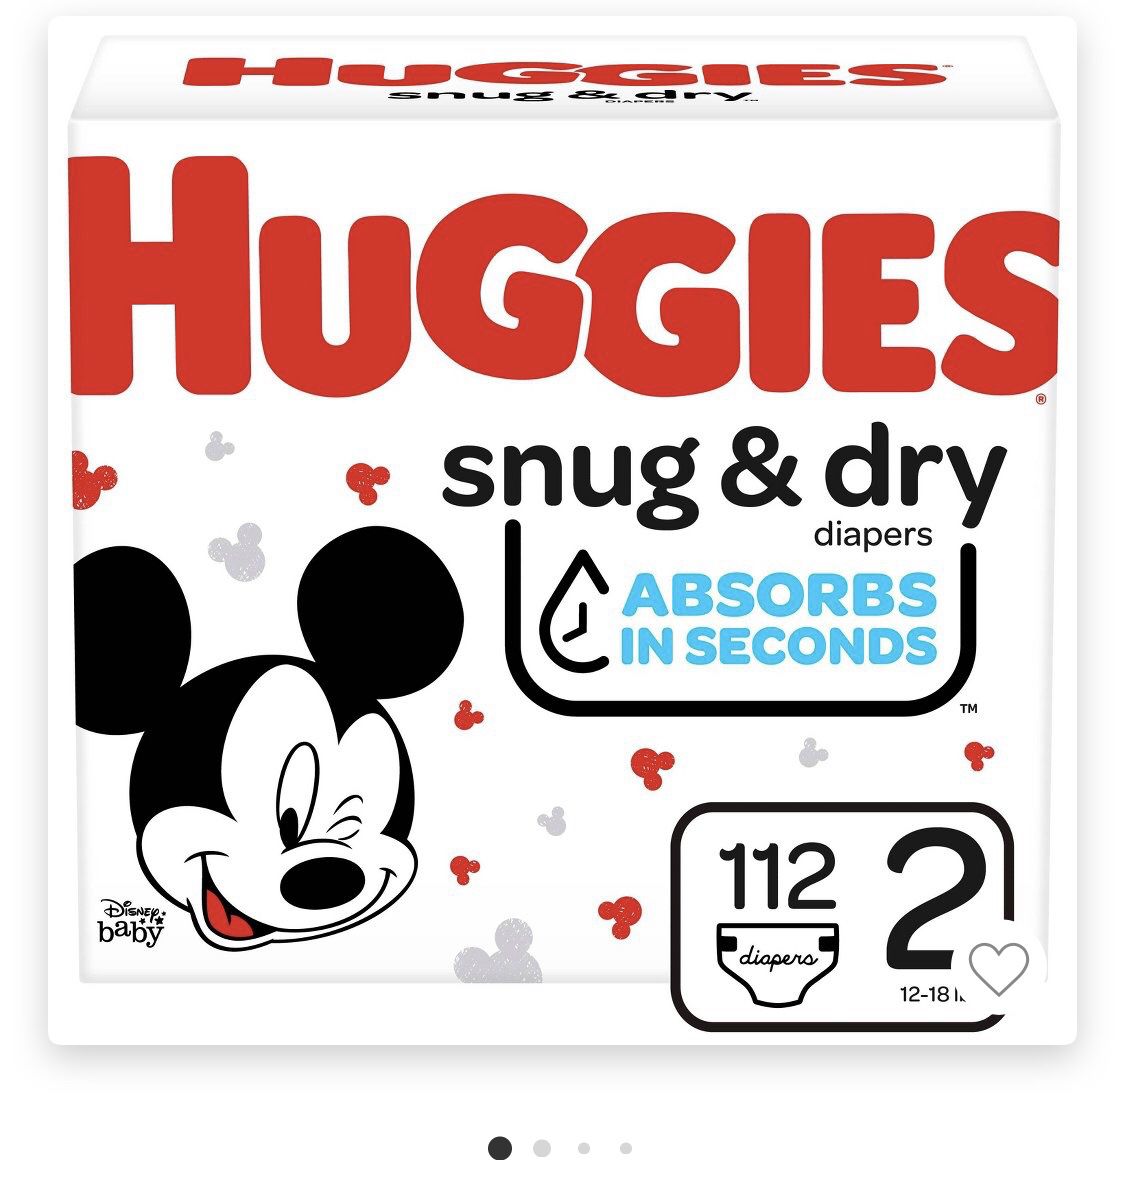 Huggies snug and dry pampers